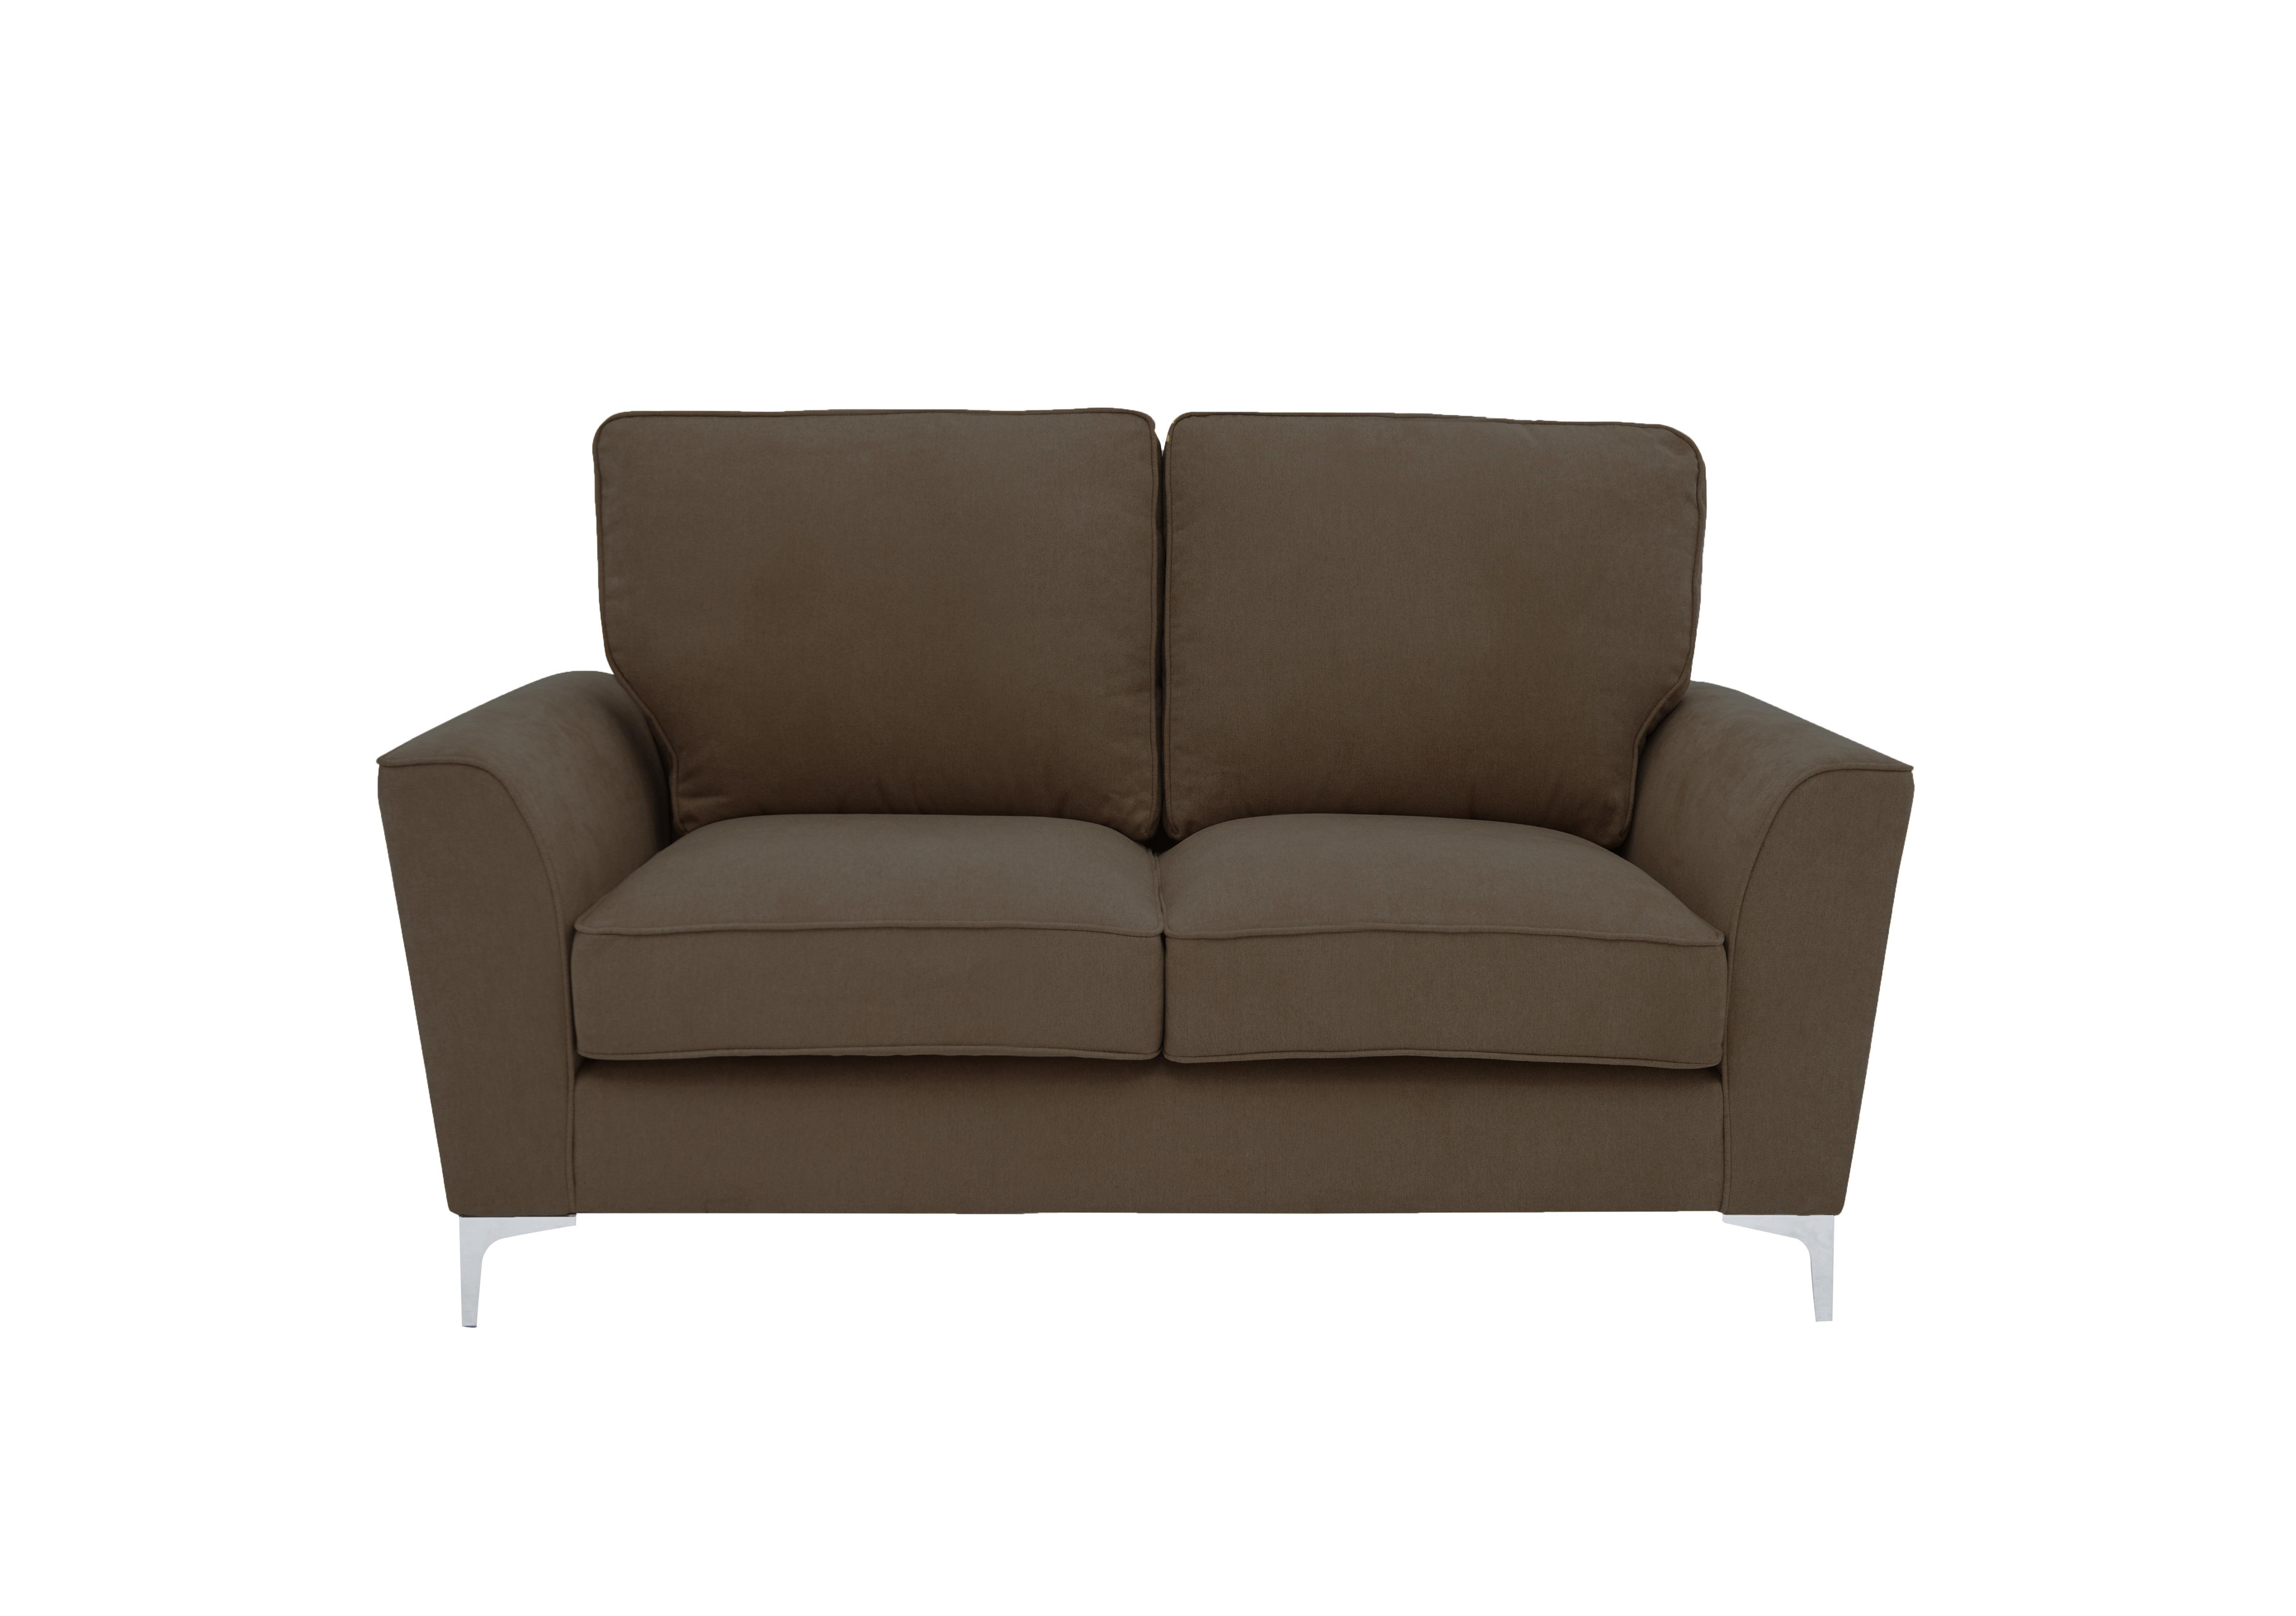 Legend 2 Seater Classic Back Fabric Sofa in Kingston Nutmeg on Furniture Village